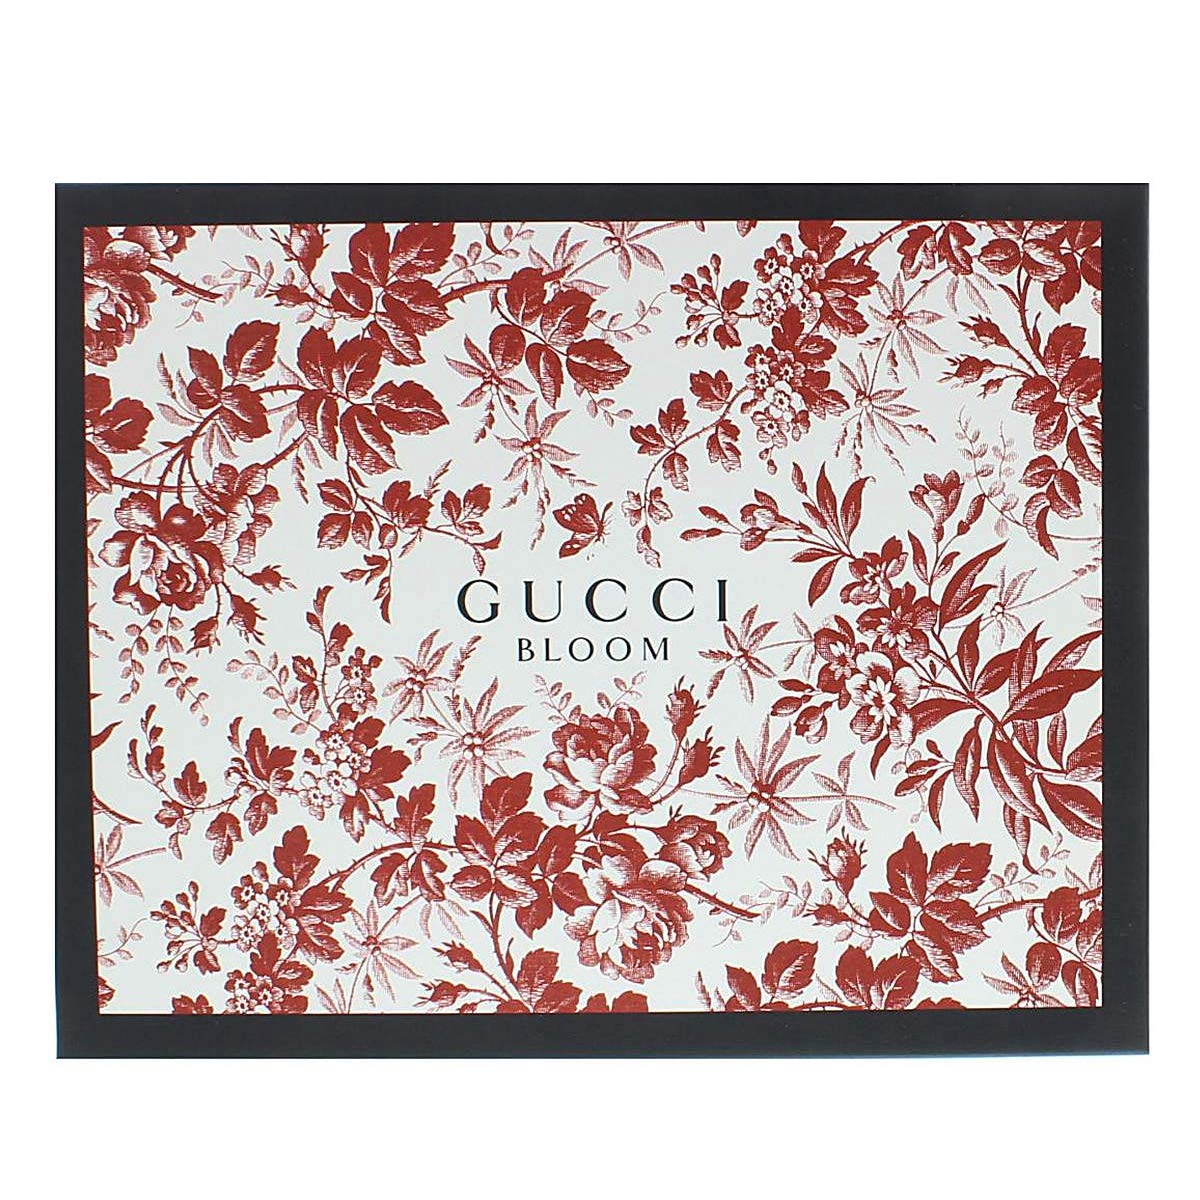 Gucci 3 Piece Bloom Eau de Parfum Spray Gift Set for Women